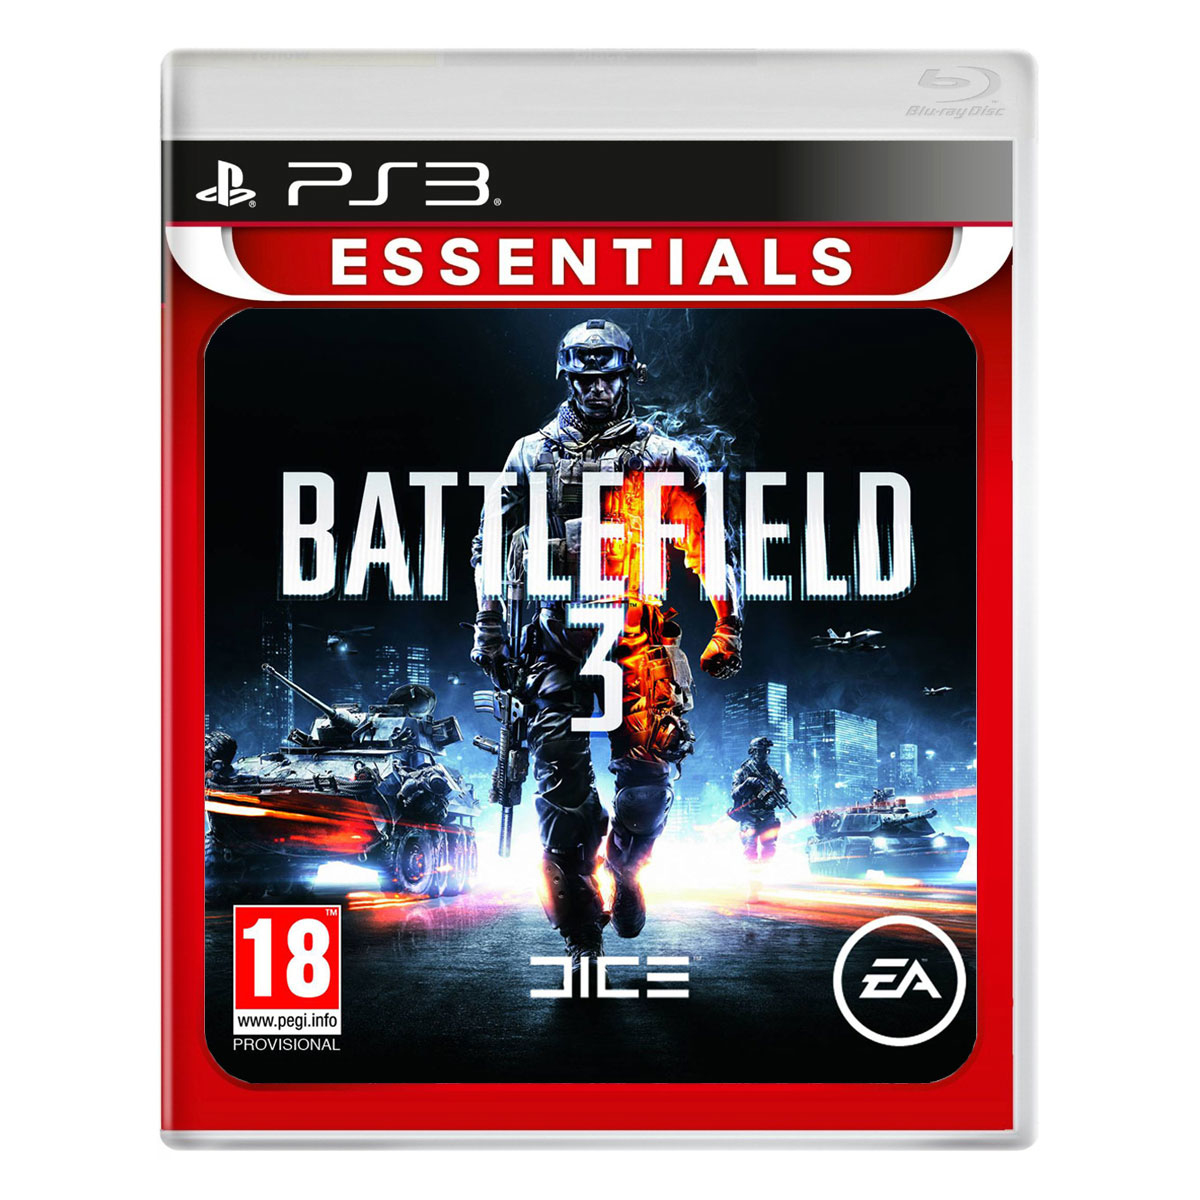 Electronic Arts BATTLEFIELD 3 ESSENTIALS PS3 HF PG REPUB PlayStation 3